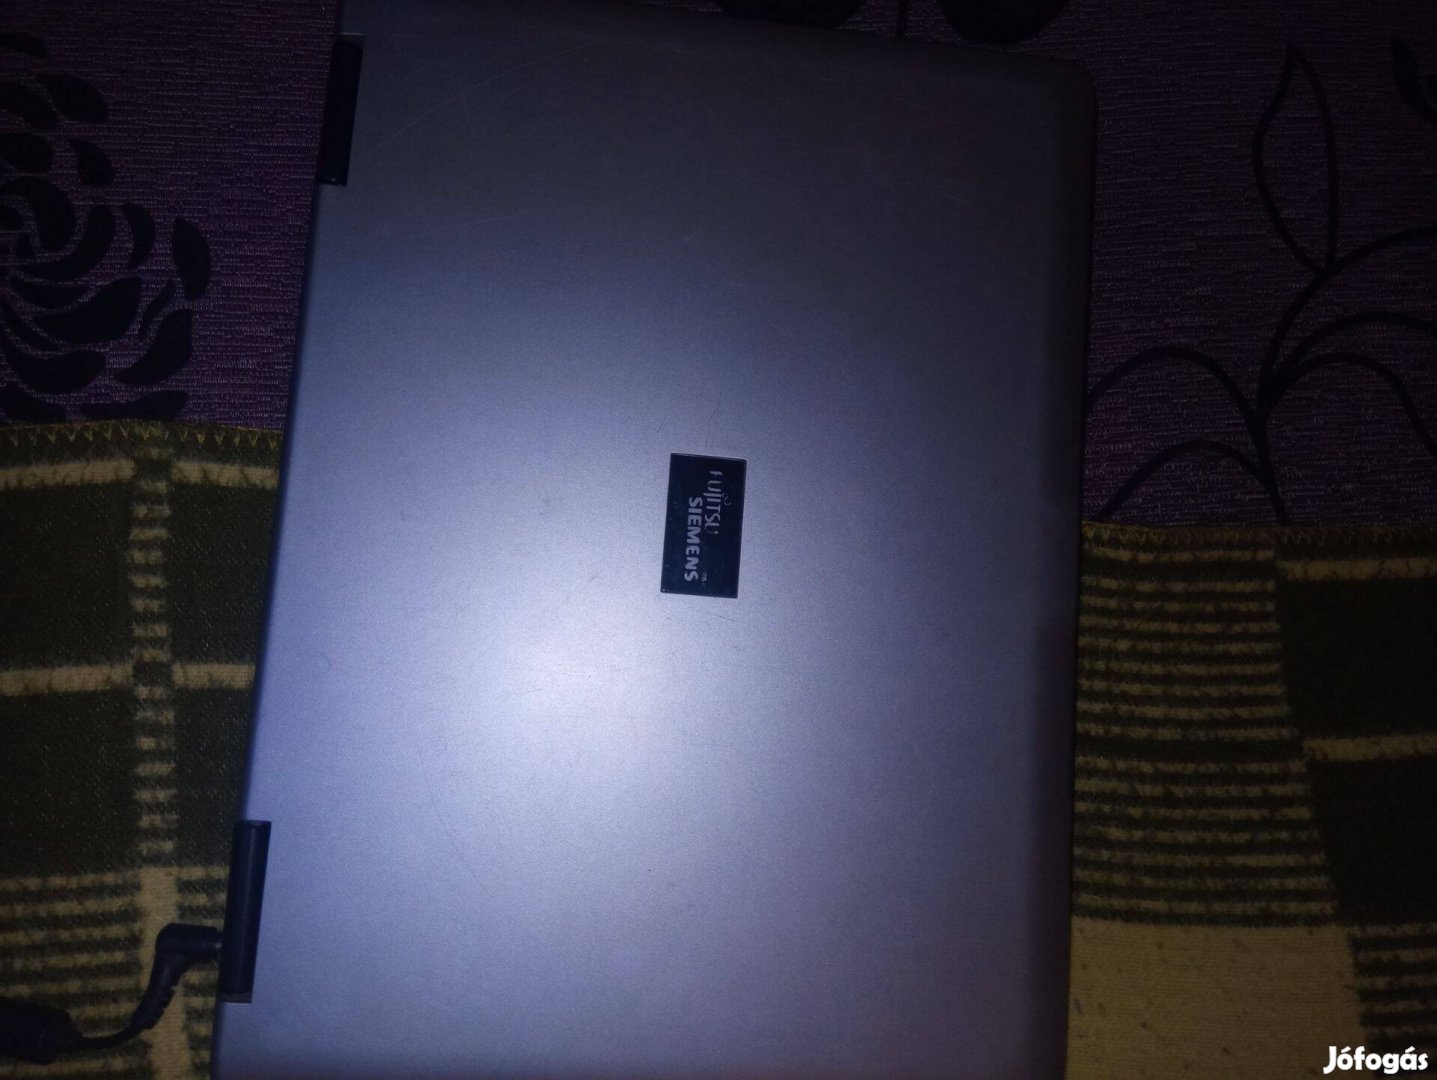 Fujitsusiemens laptop